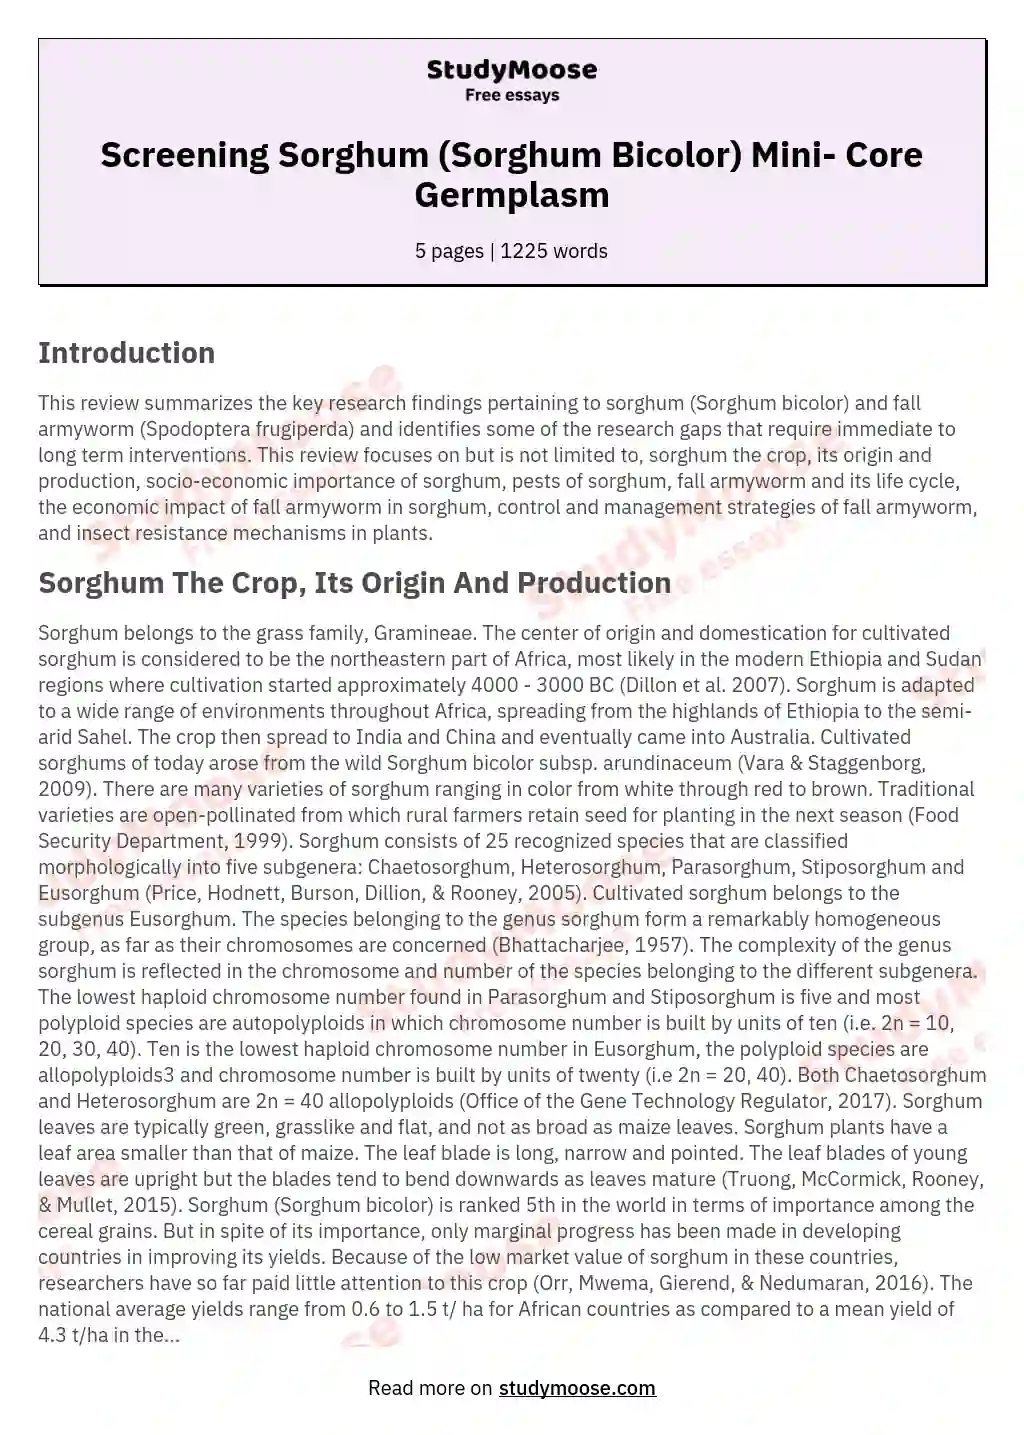 Screening Sorghum (Sorghum Bicolor) Mini- Core Germplasm essay